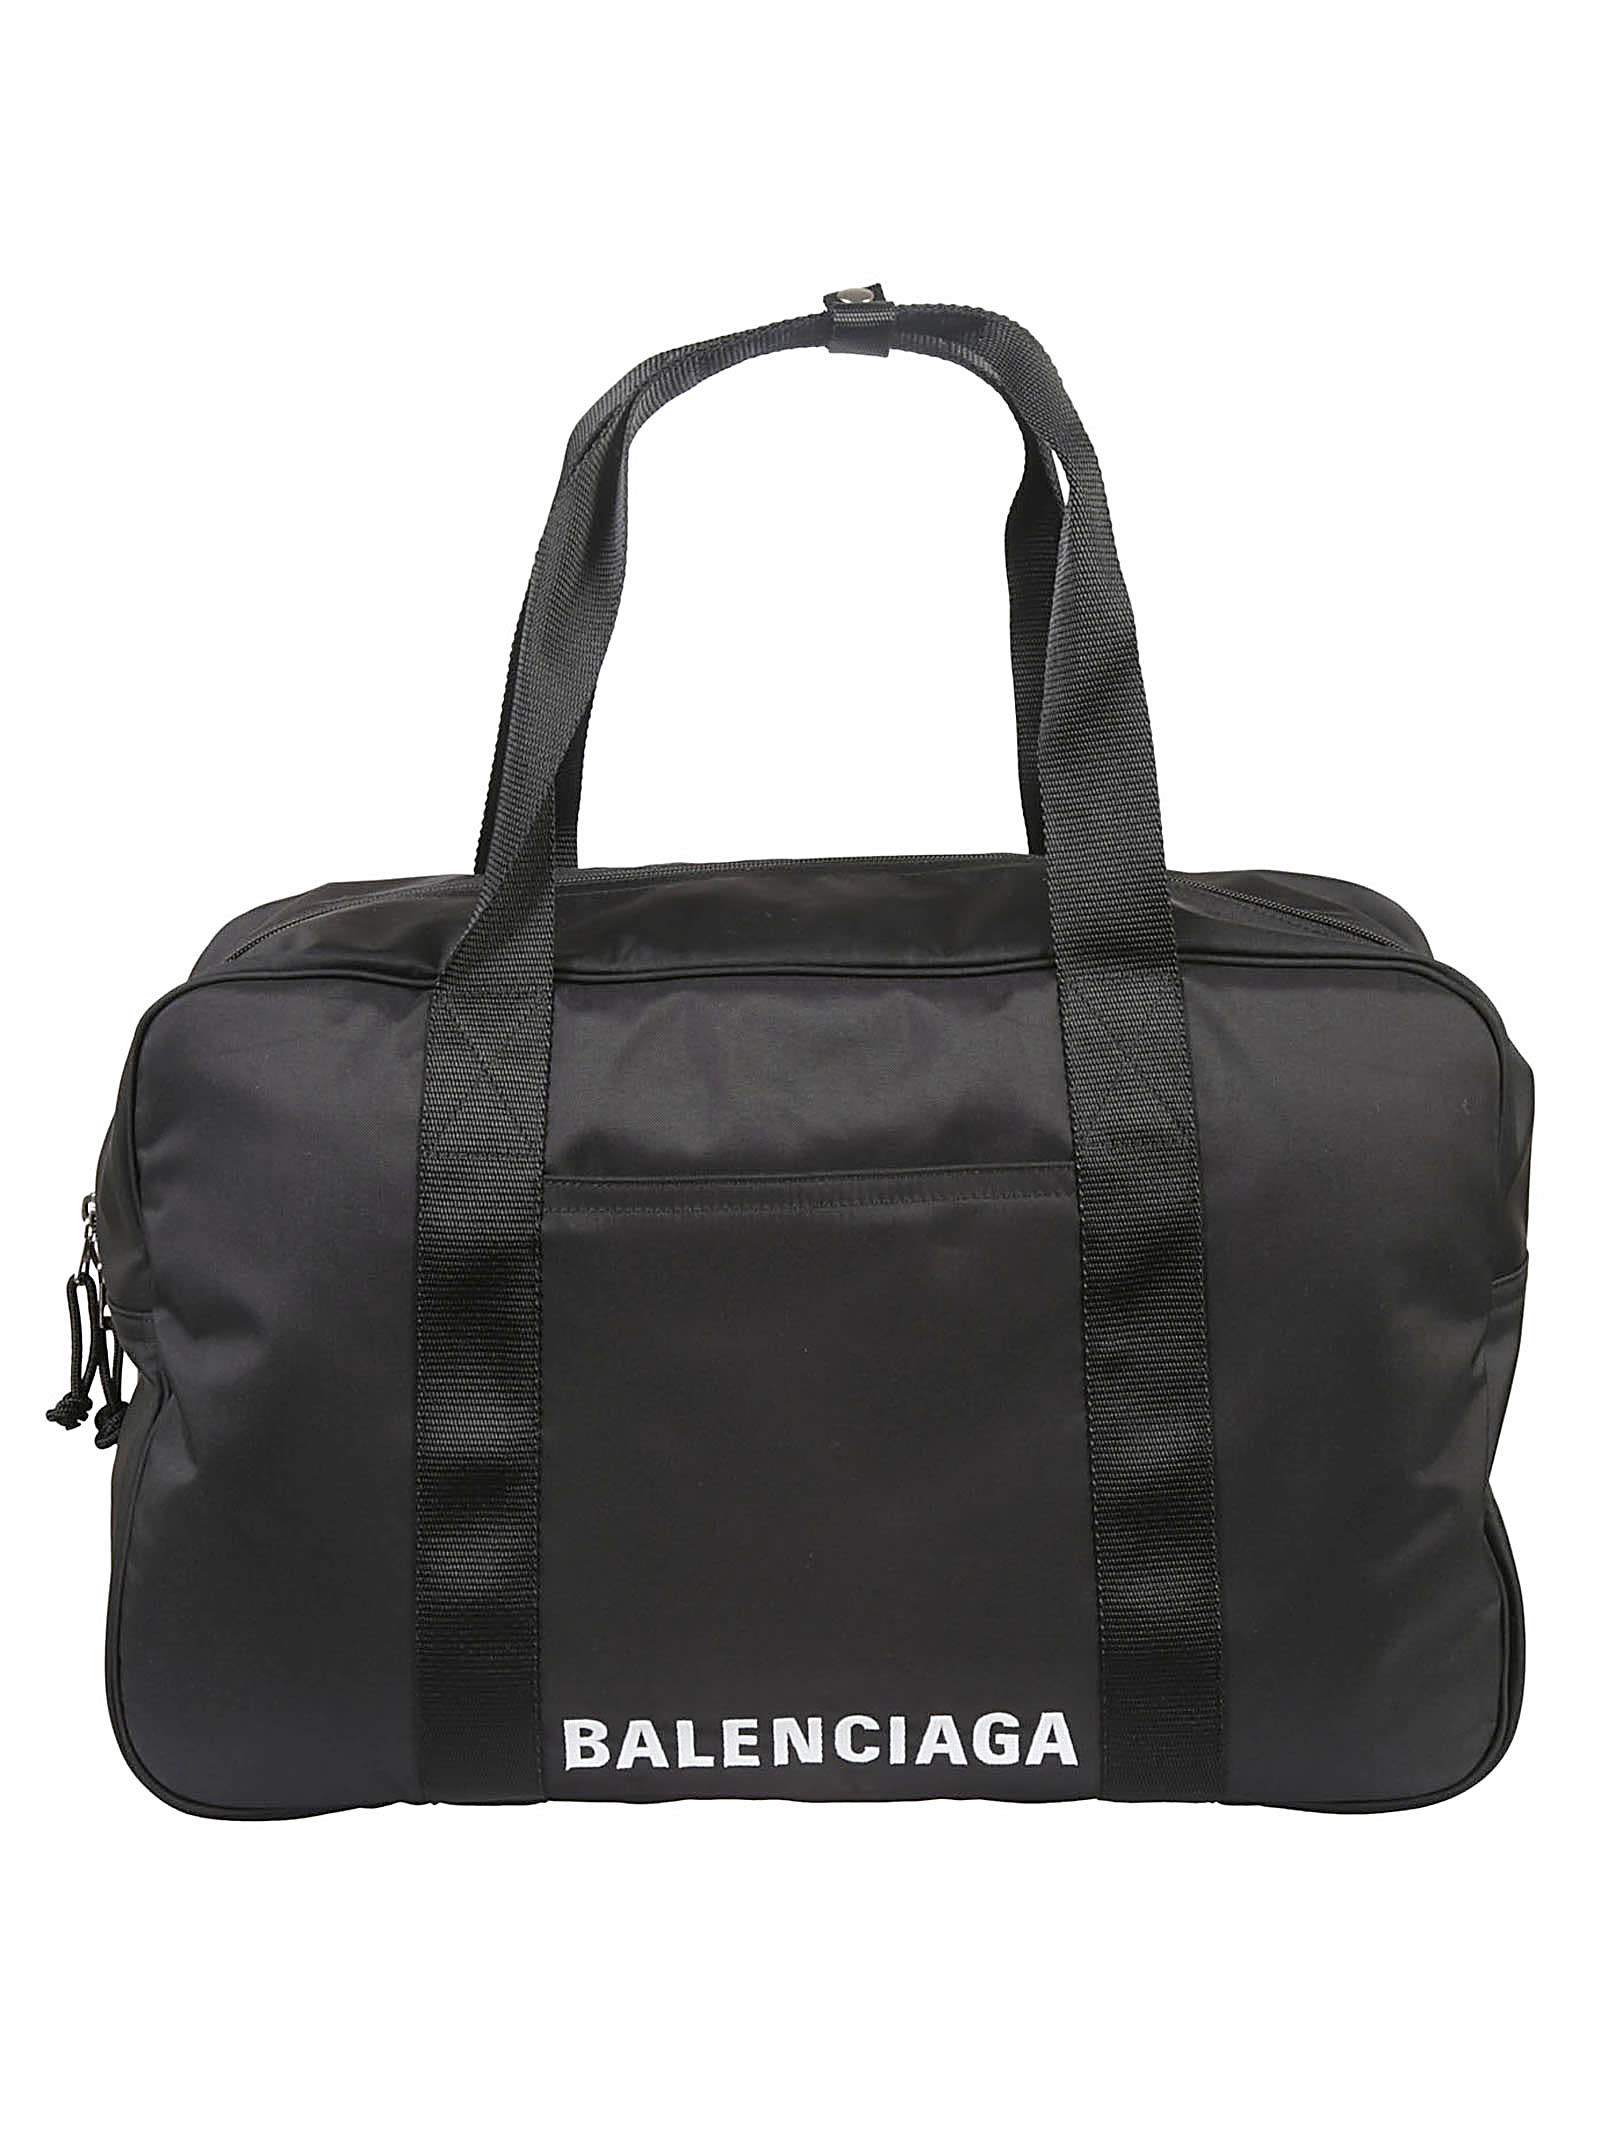 Balenciaga Wheel Duffle Bag